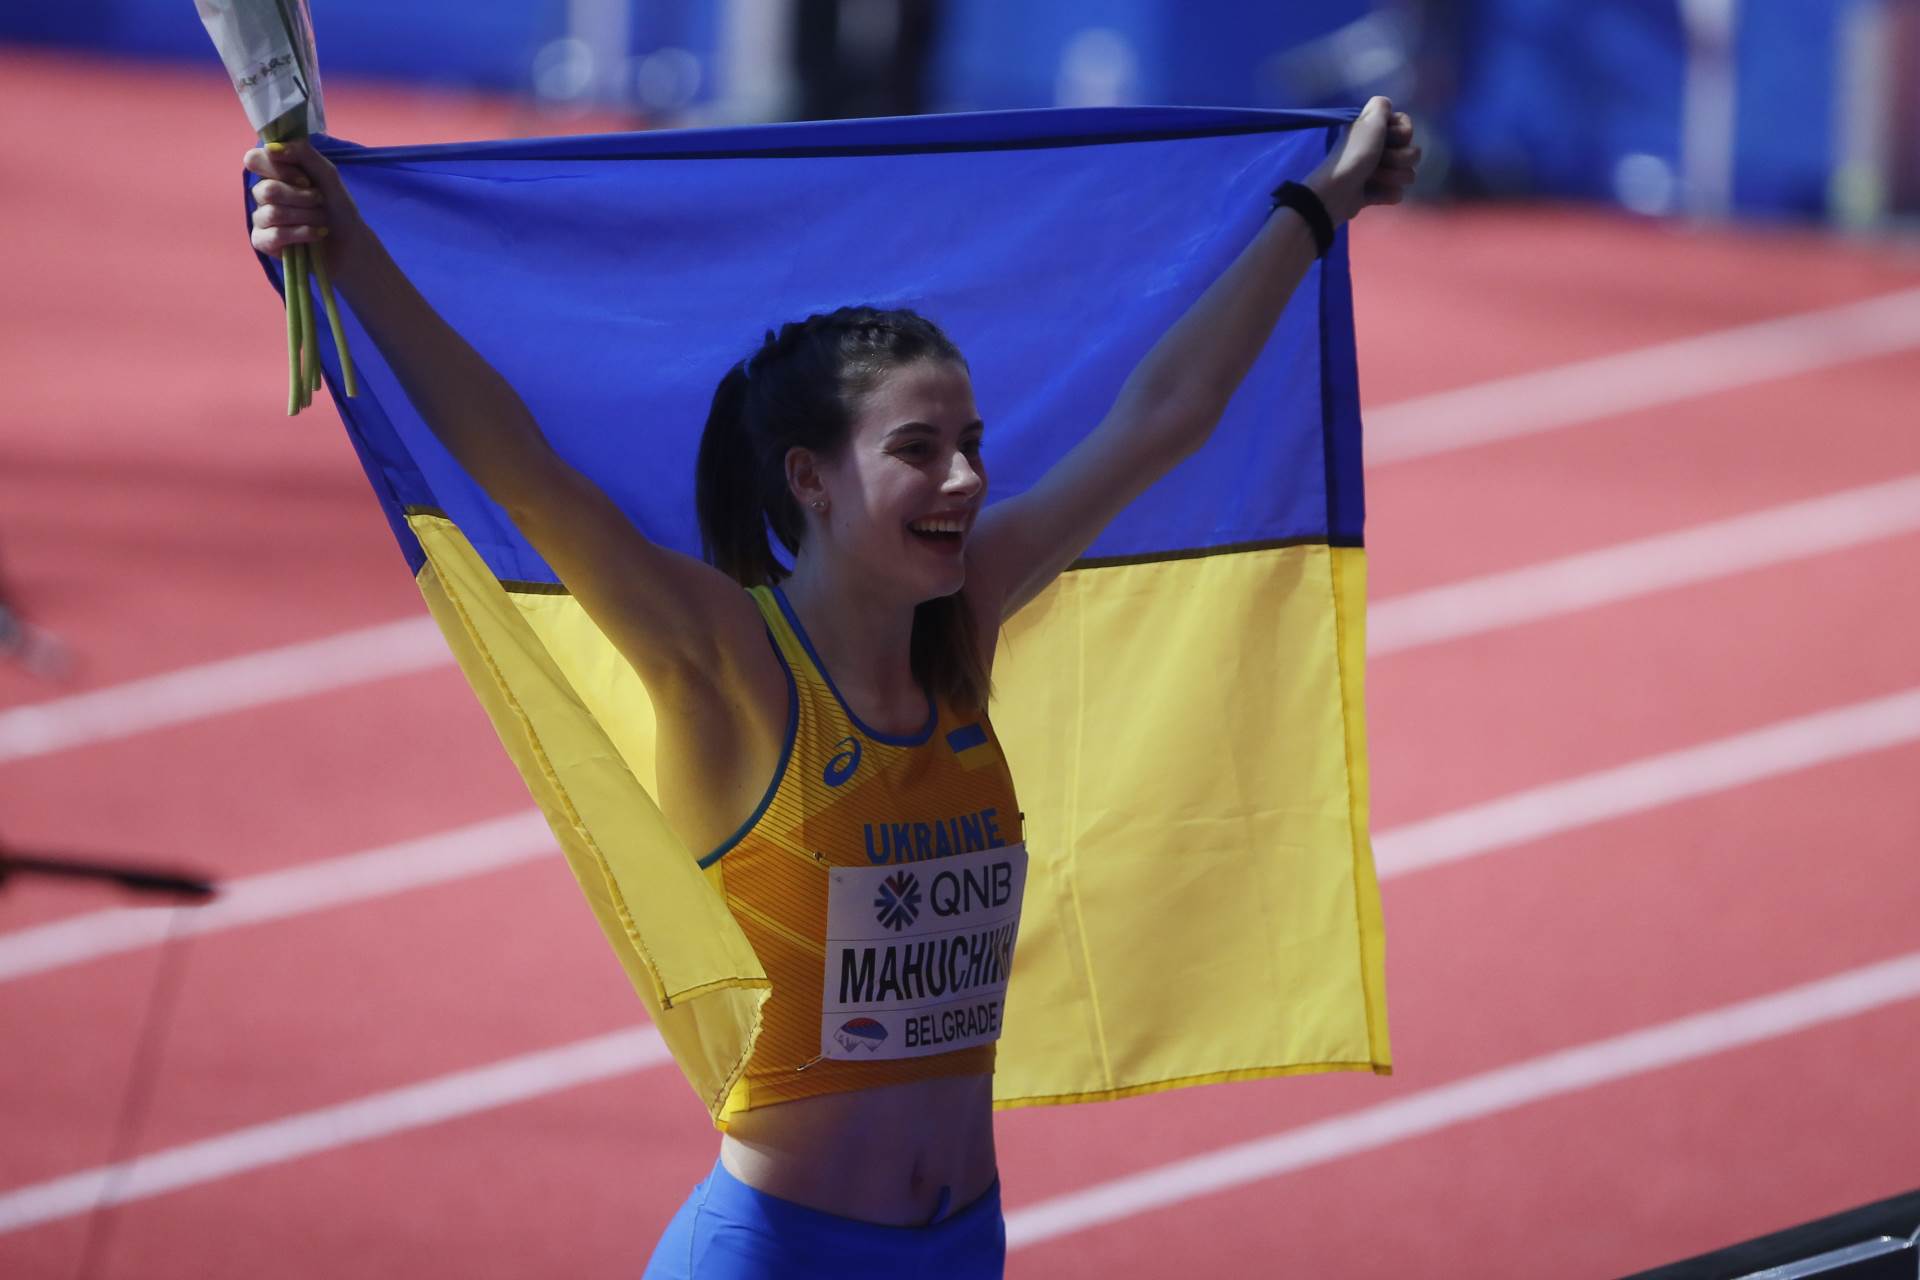  Atletika Ukrajinka (7).JPG 